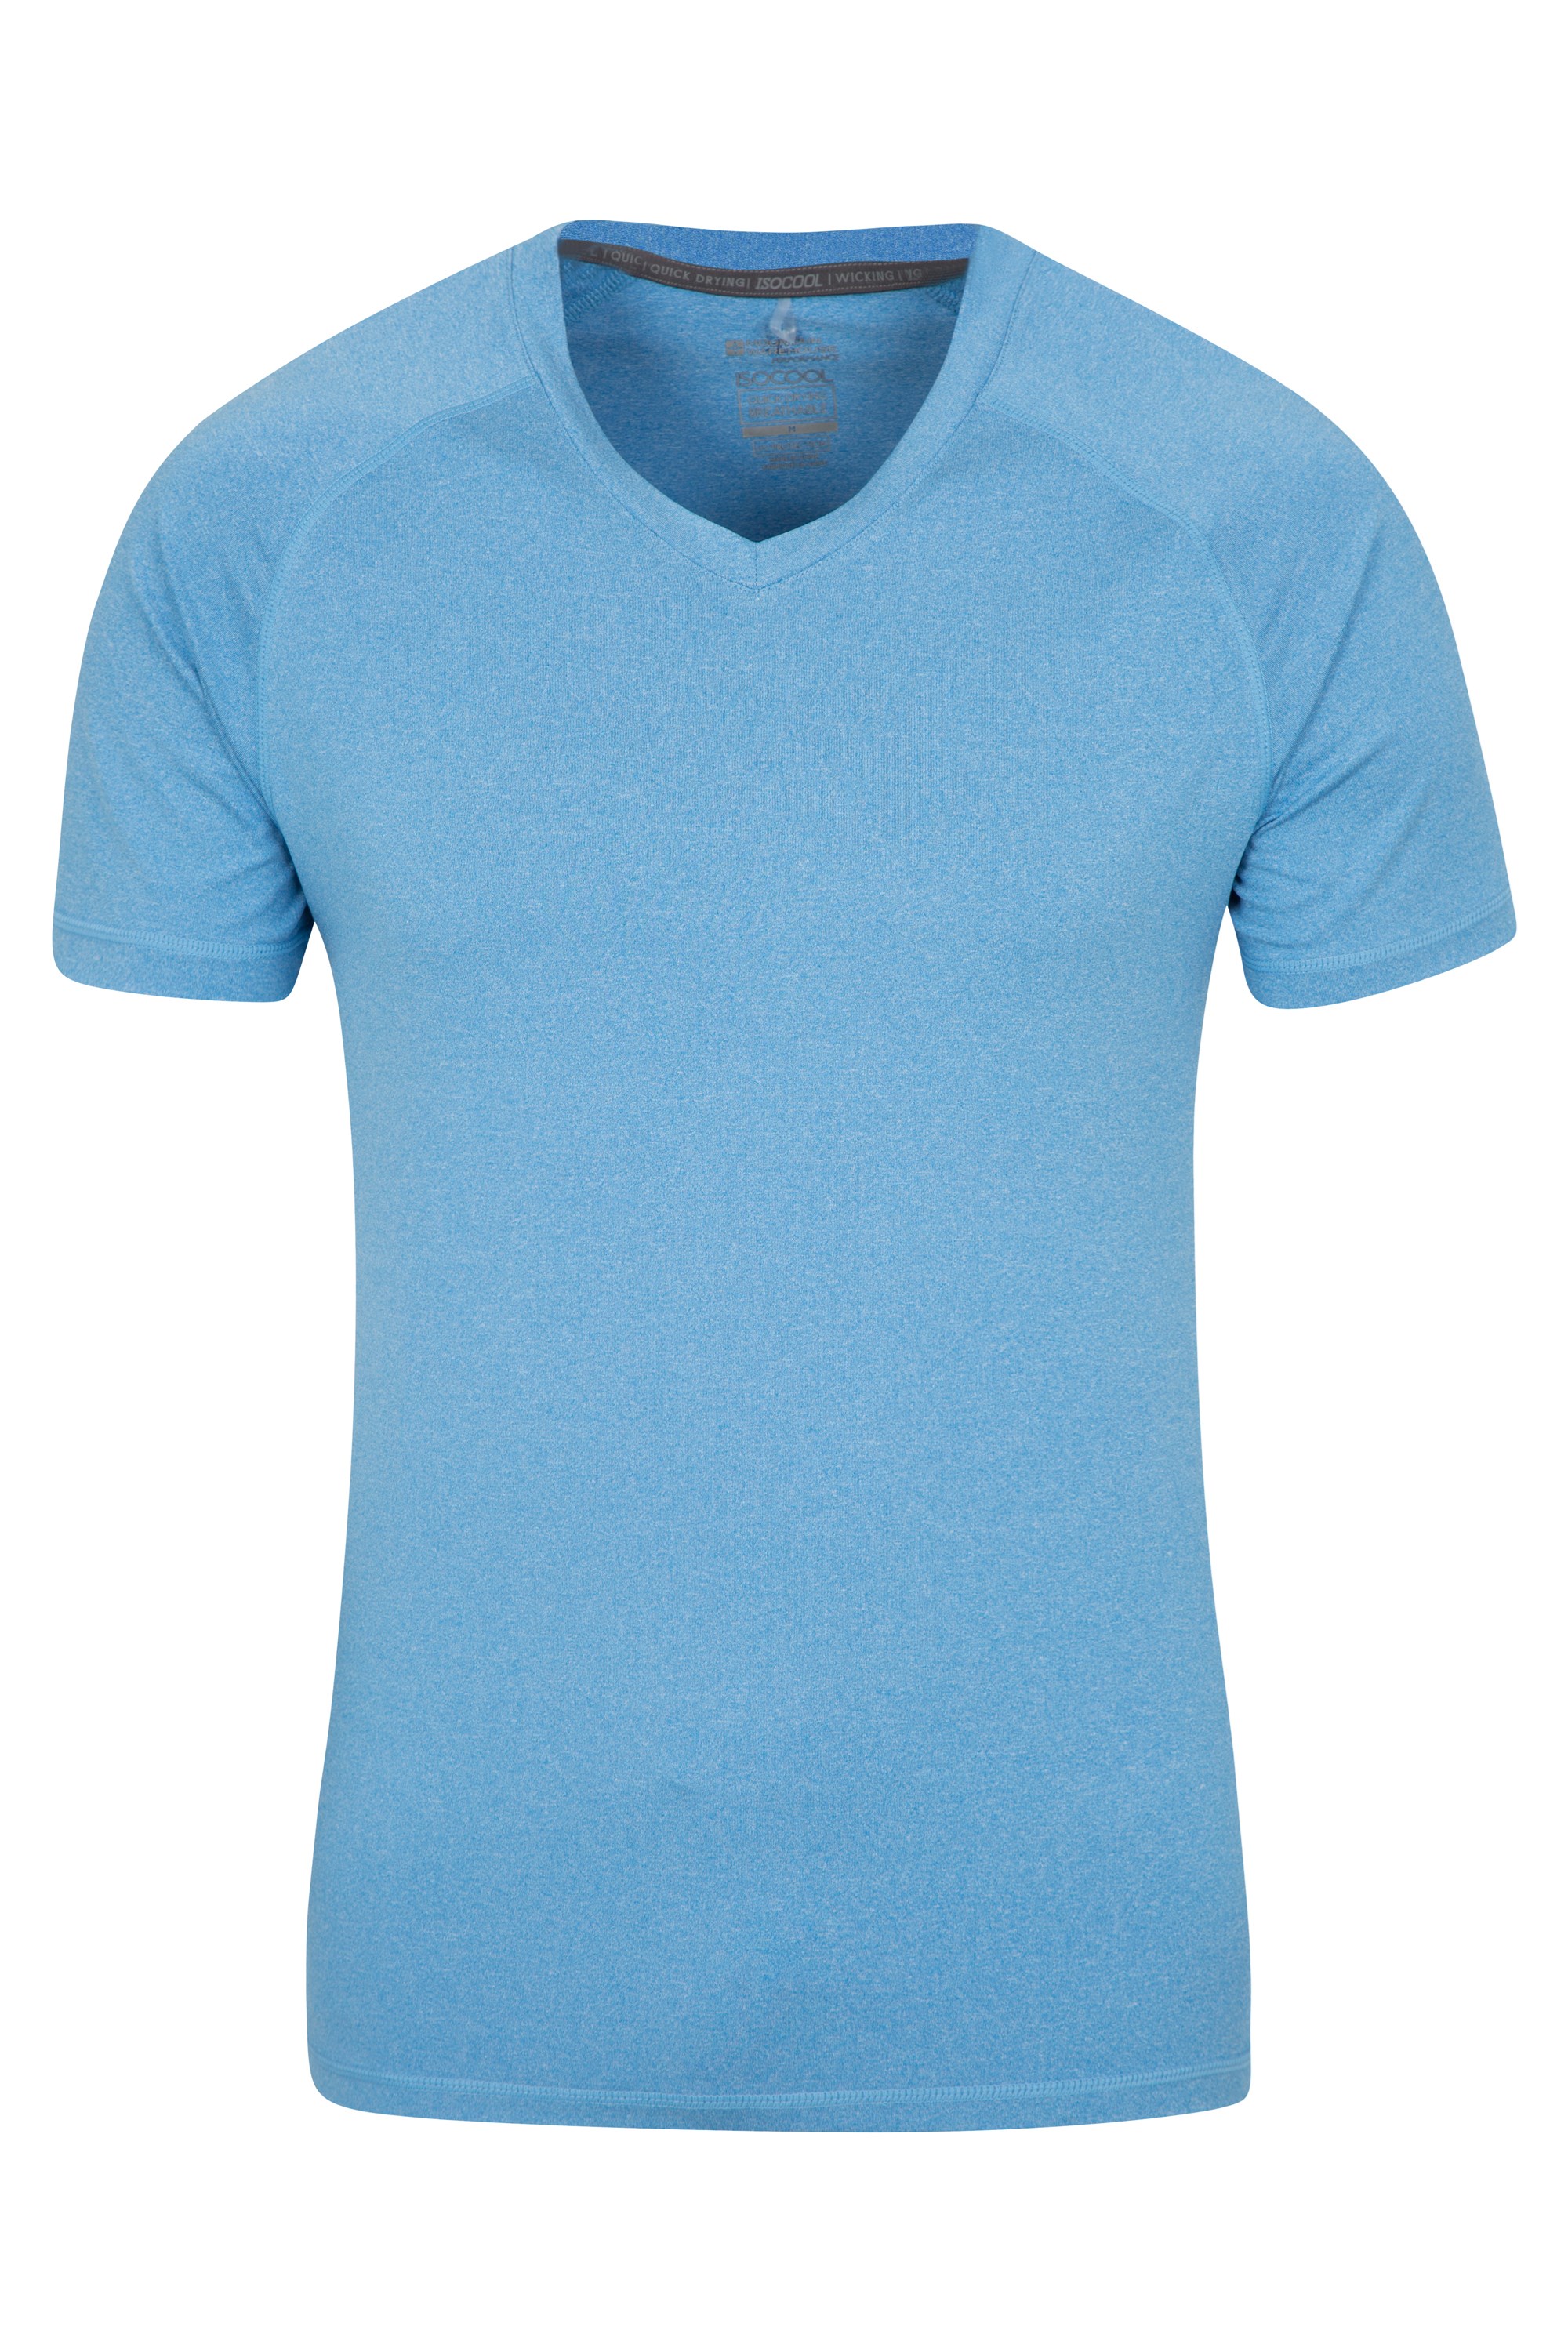 Mountain Warehouse Agra Mens V Neck T Shirt Blue